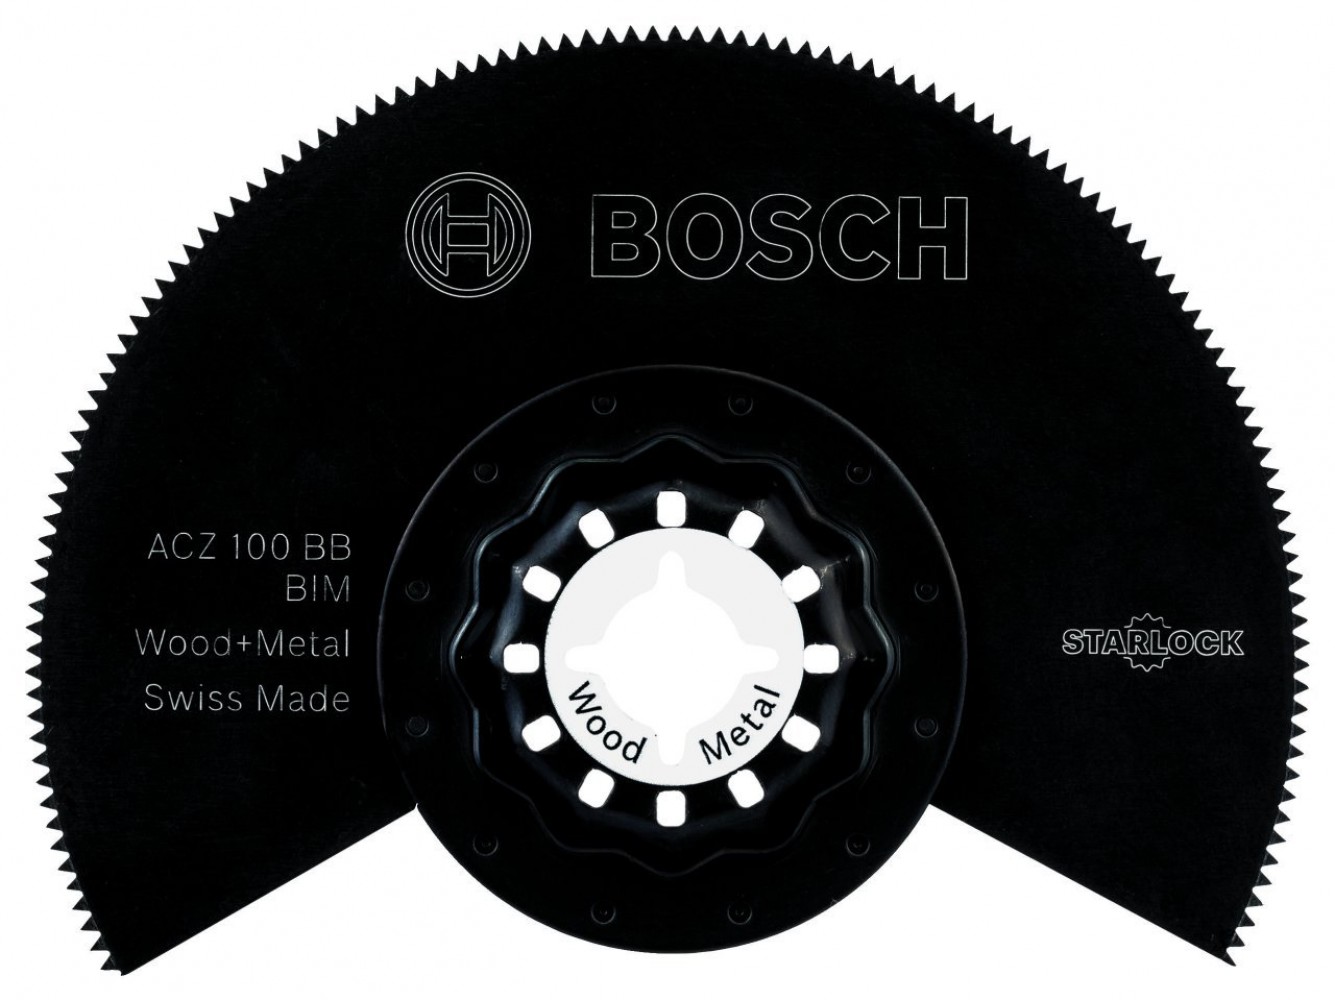 Bosch - Starlock - ACZ 100 BB - BIM Ahşap ve Metal İçin Segman Testere Bıçağı